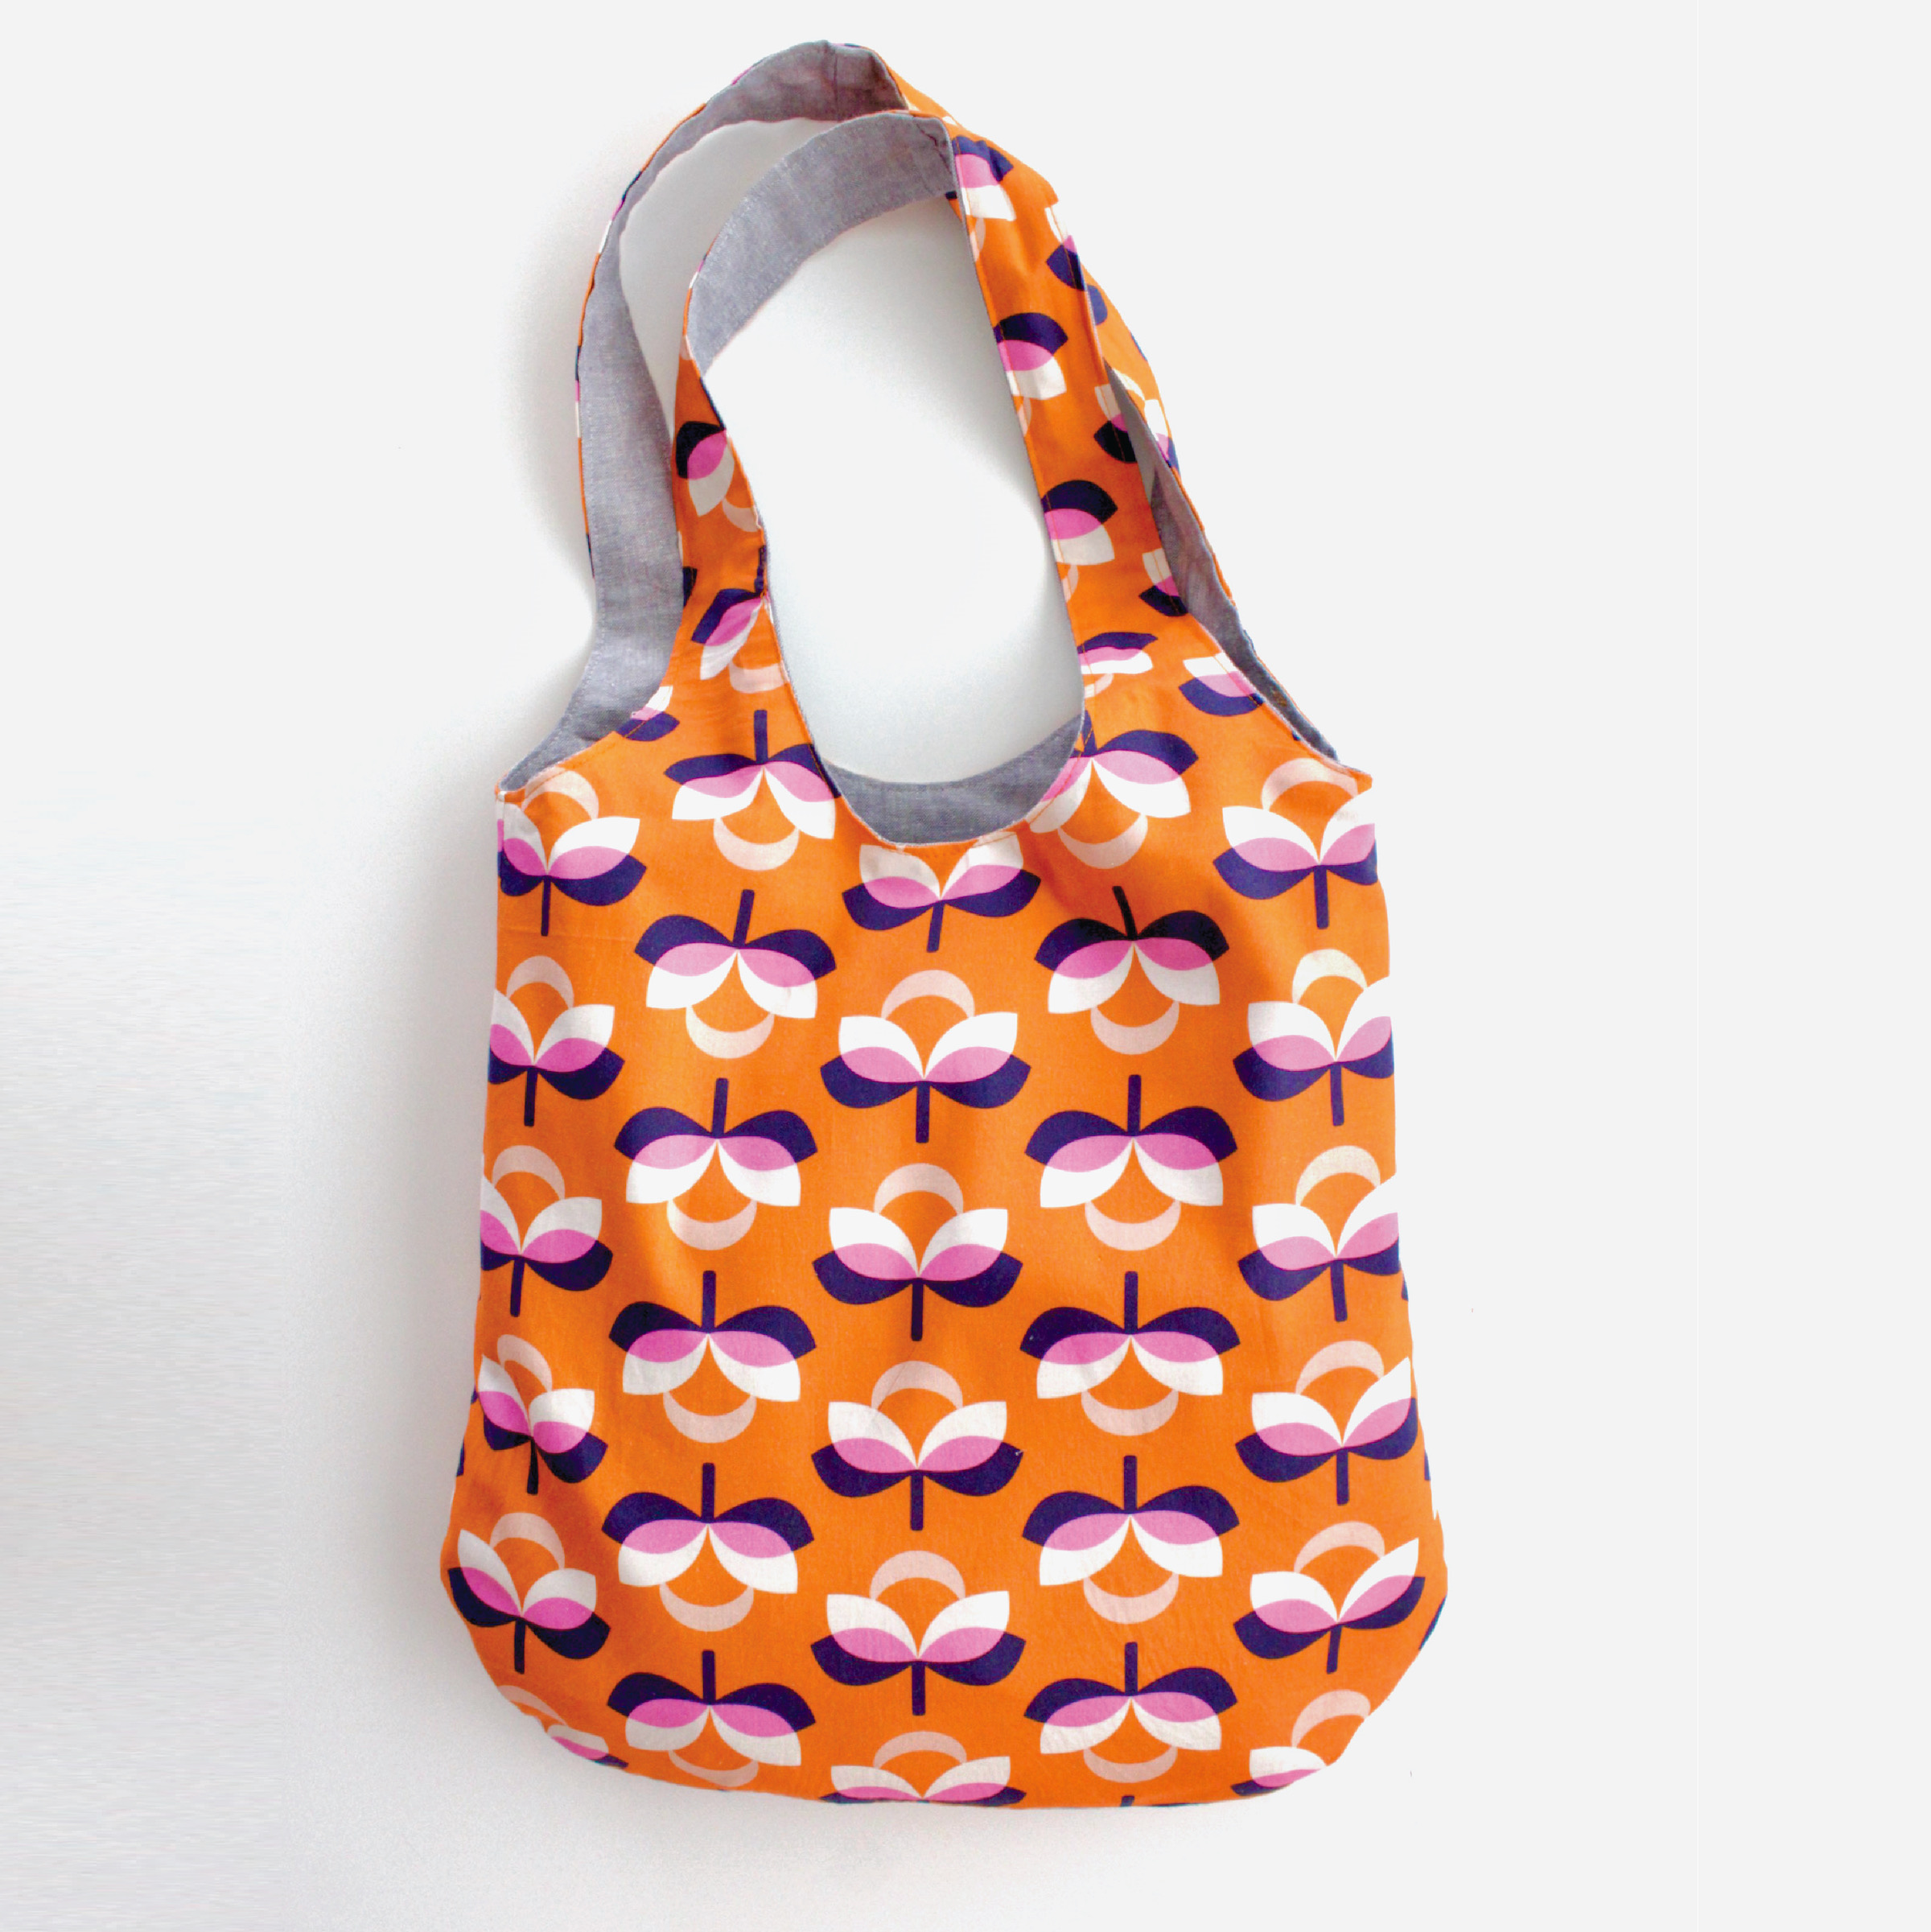 My own Handbag pattern - Handmade Sloth Handbag